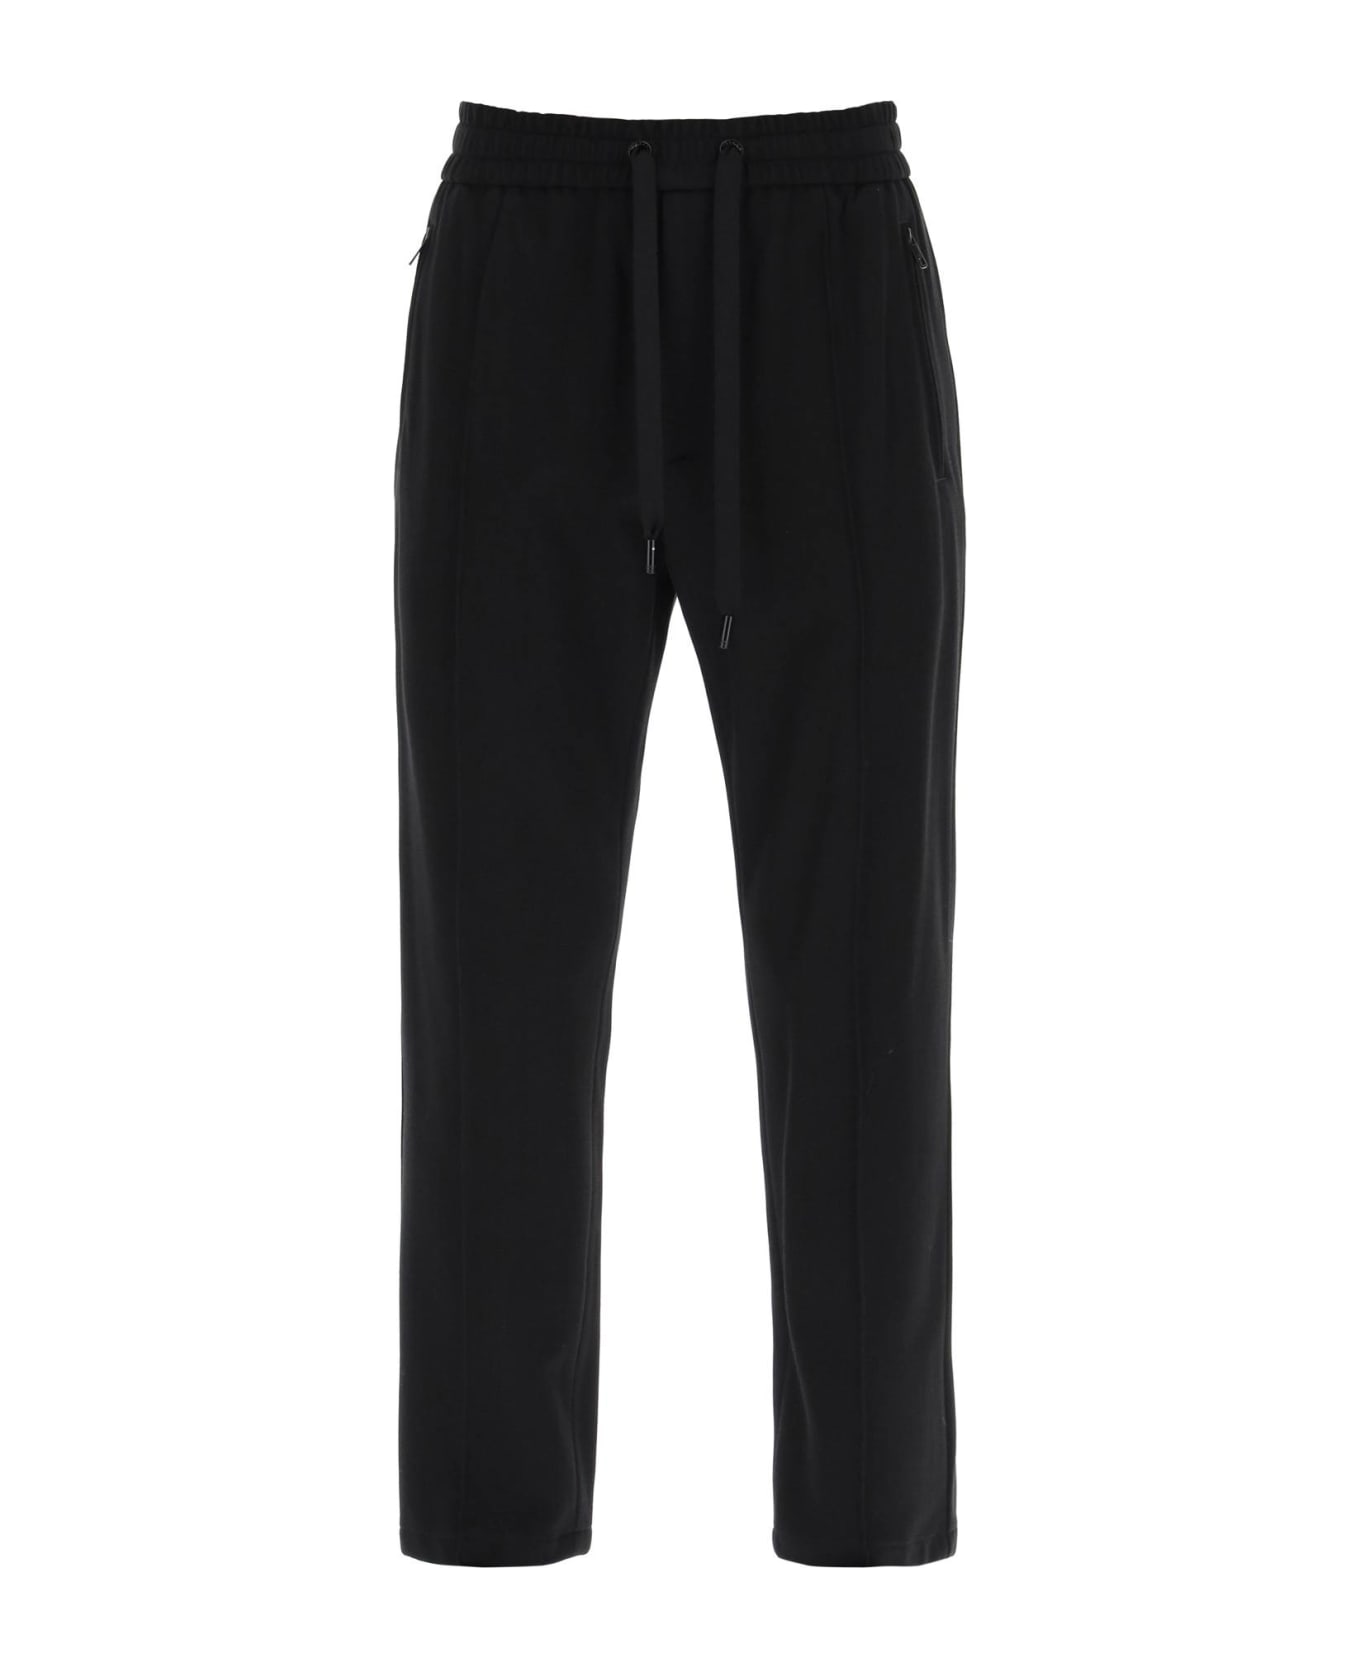 Dolce & Gabbana Jogging Pants - NERO (Black) ボトムス